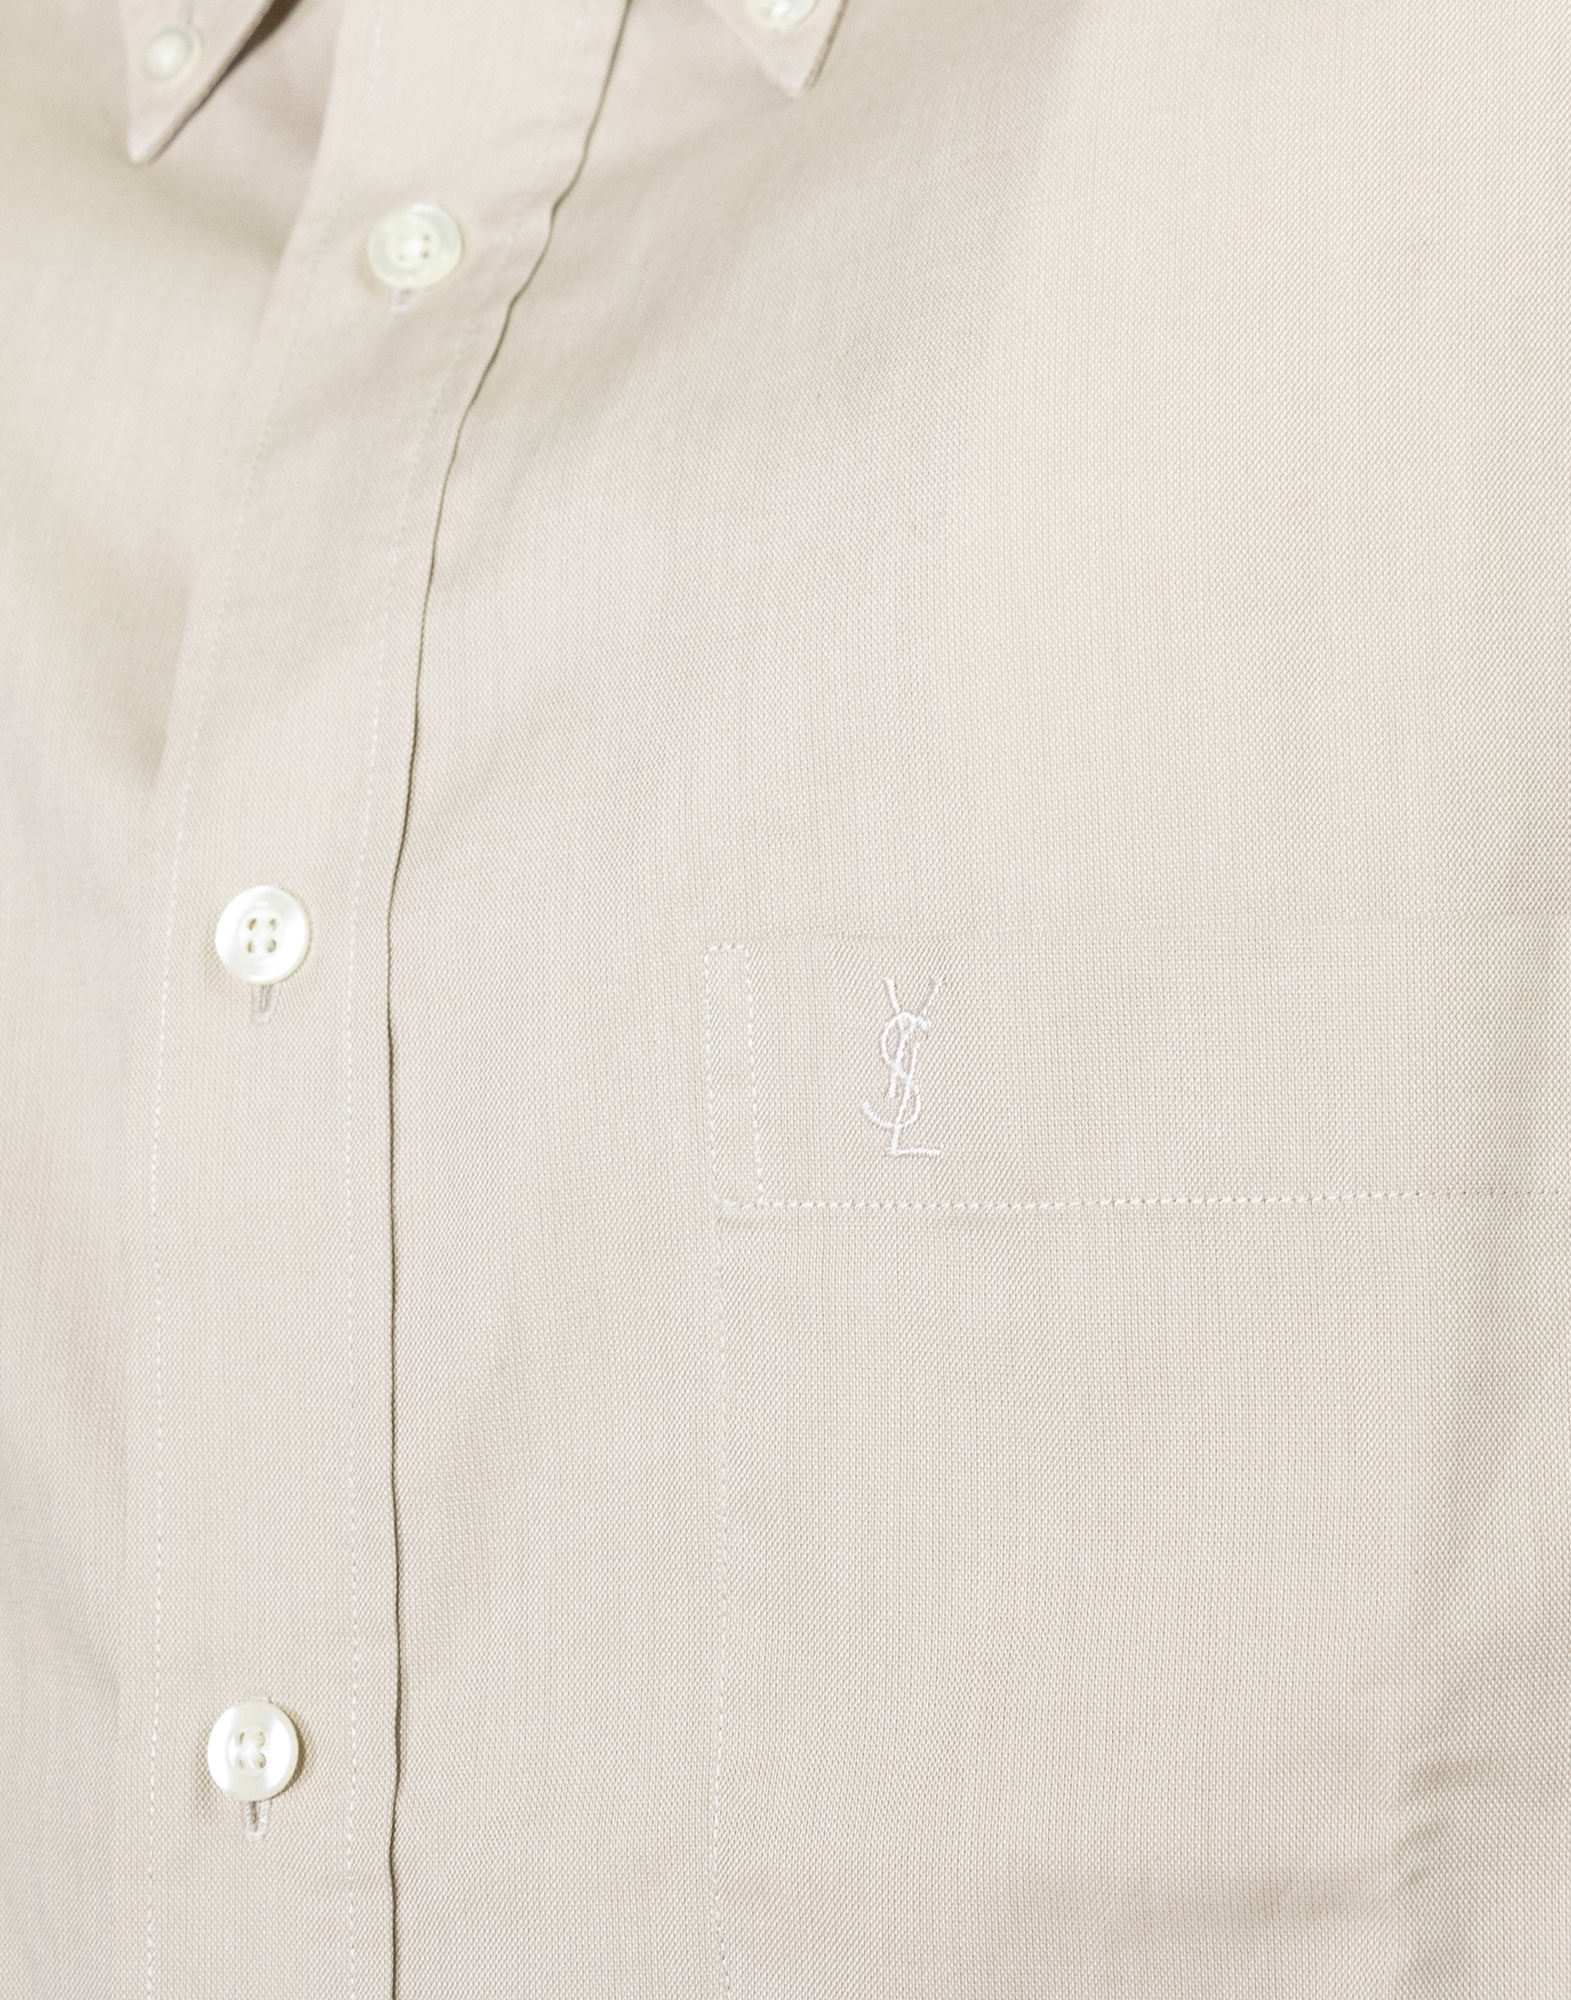 Yves Saint Laurent - Camicia plain in 100% cotone